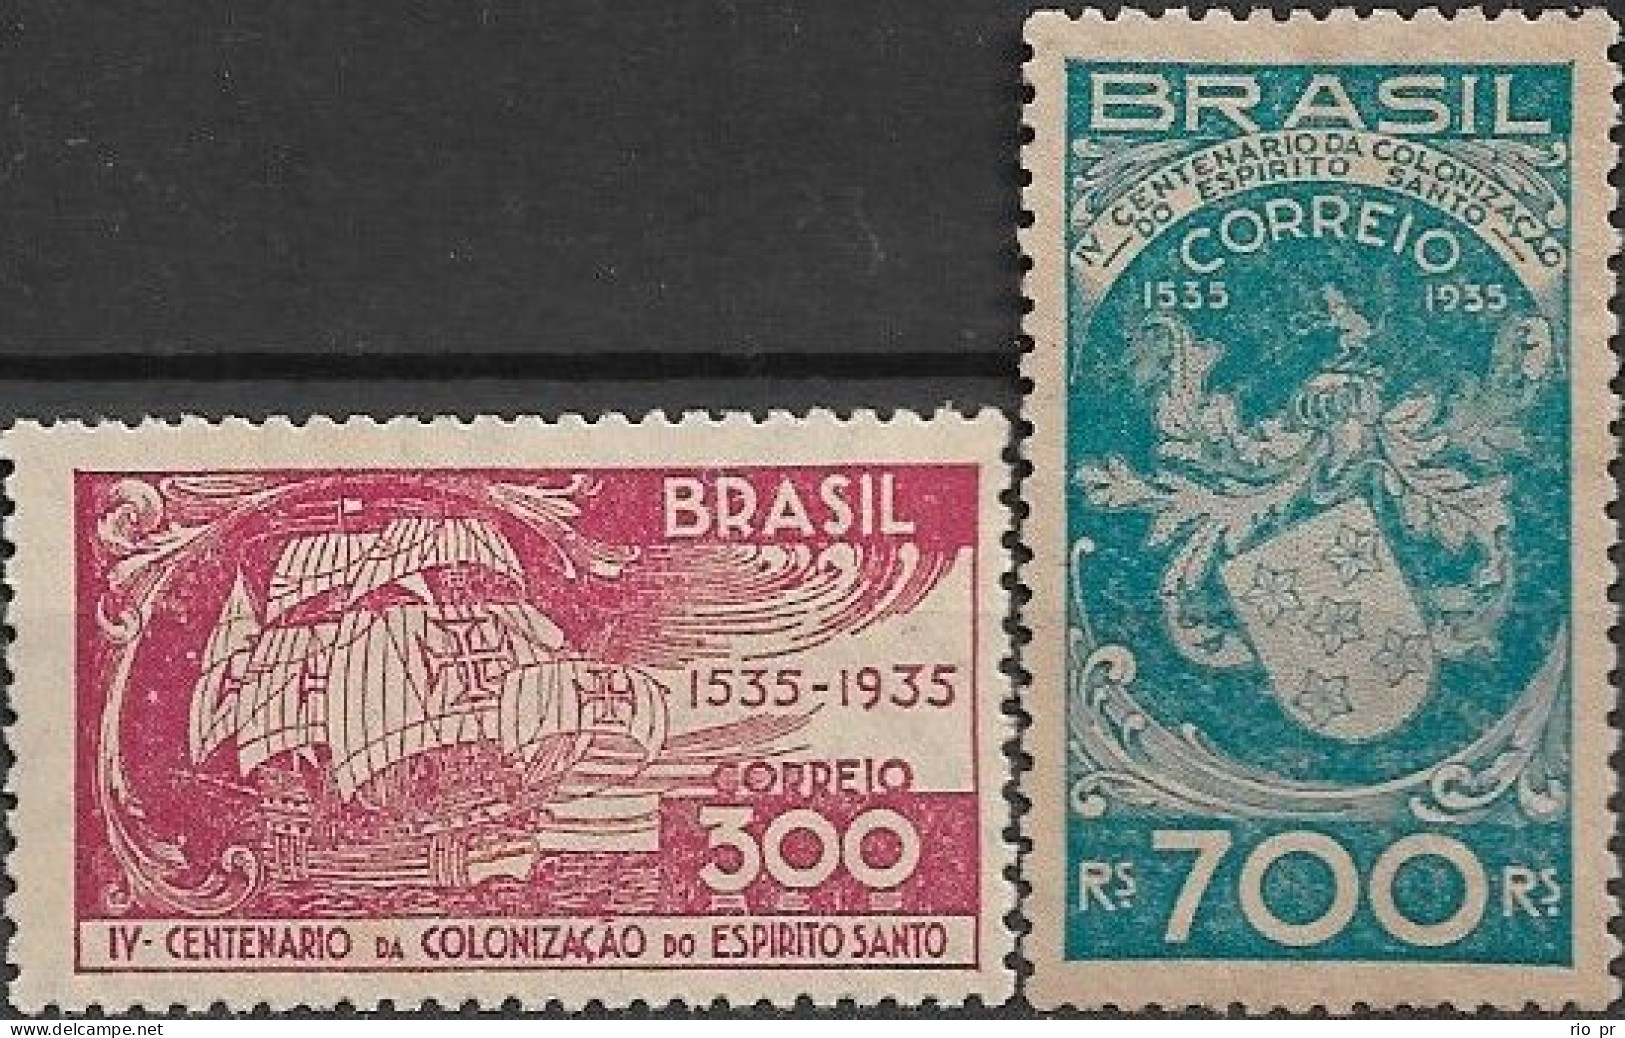 BRAZIL - COMPLETE SET 4th CENTENARY OF THE COLONIZATION OF ESPÍRITO ANTO STATE 1935 - MNH/NEW NO GUM - Nuevos